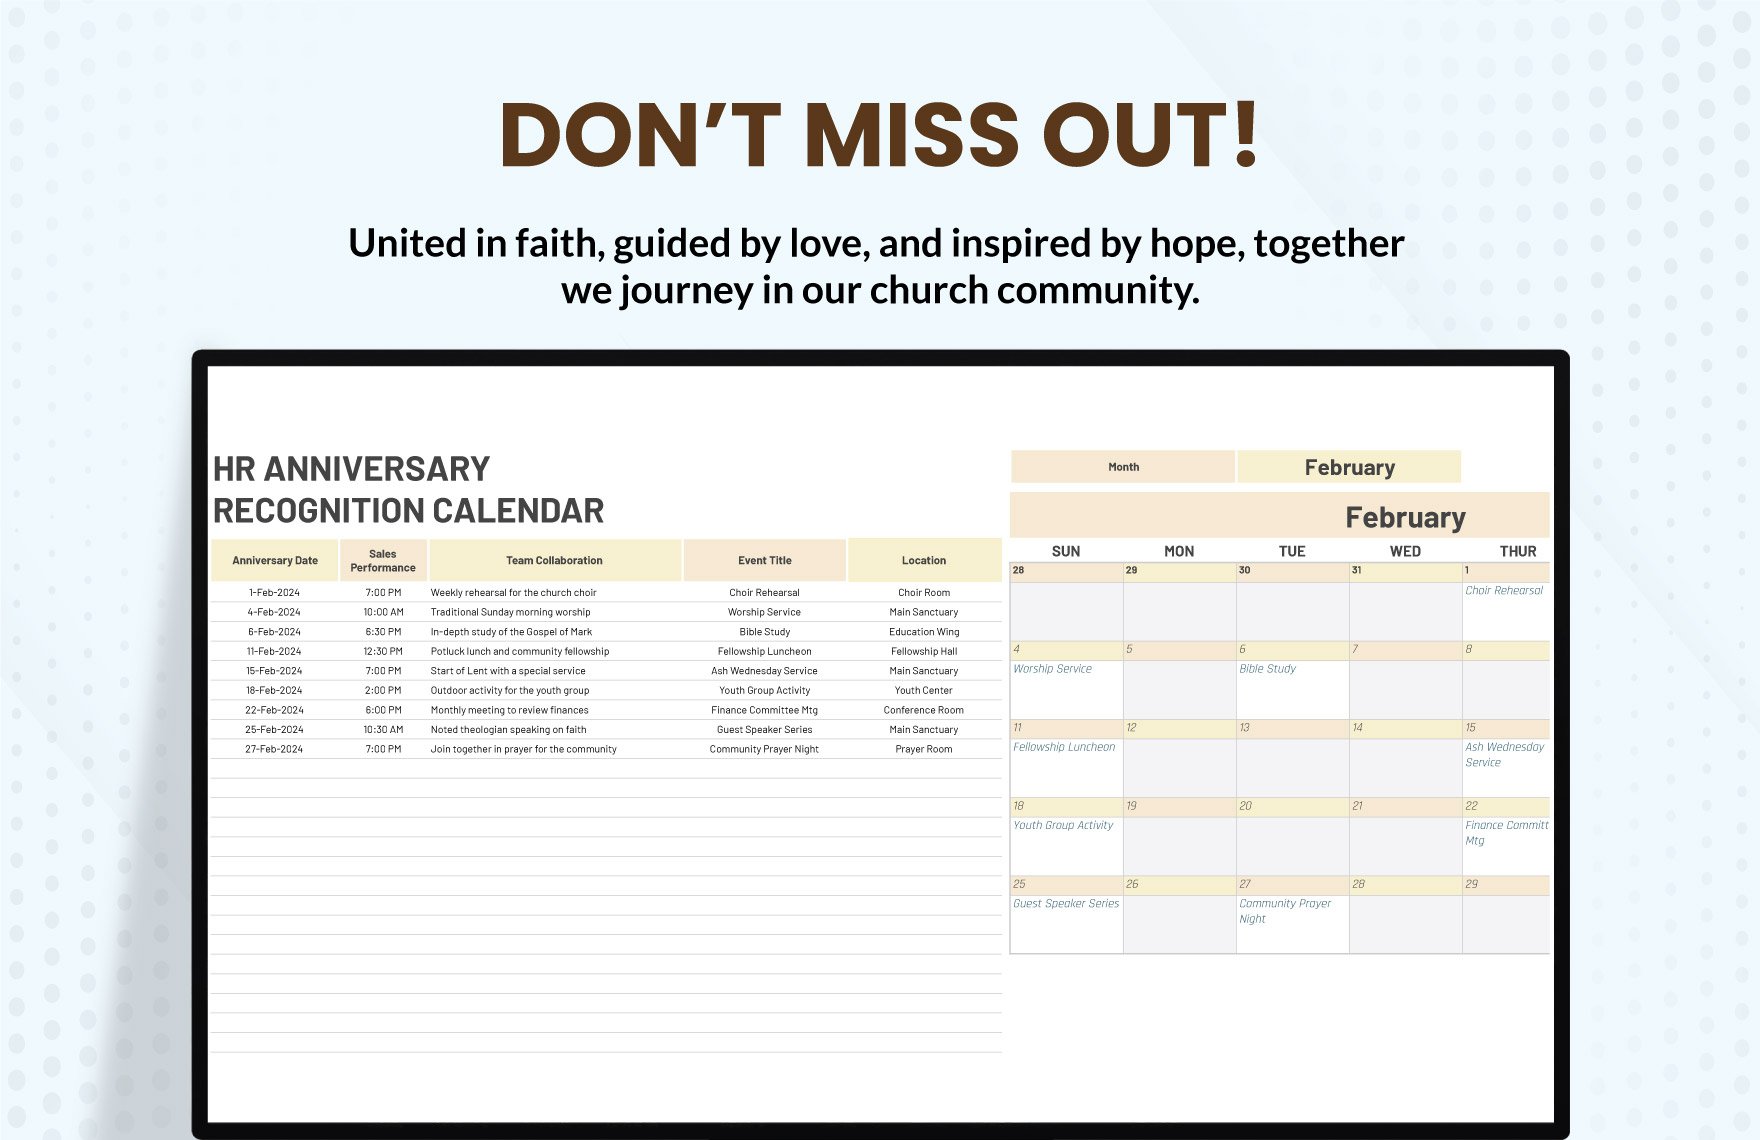 Church Calendar Template